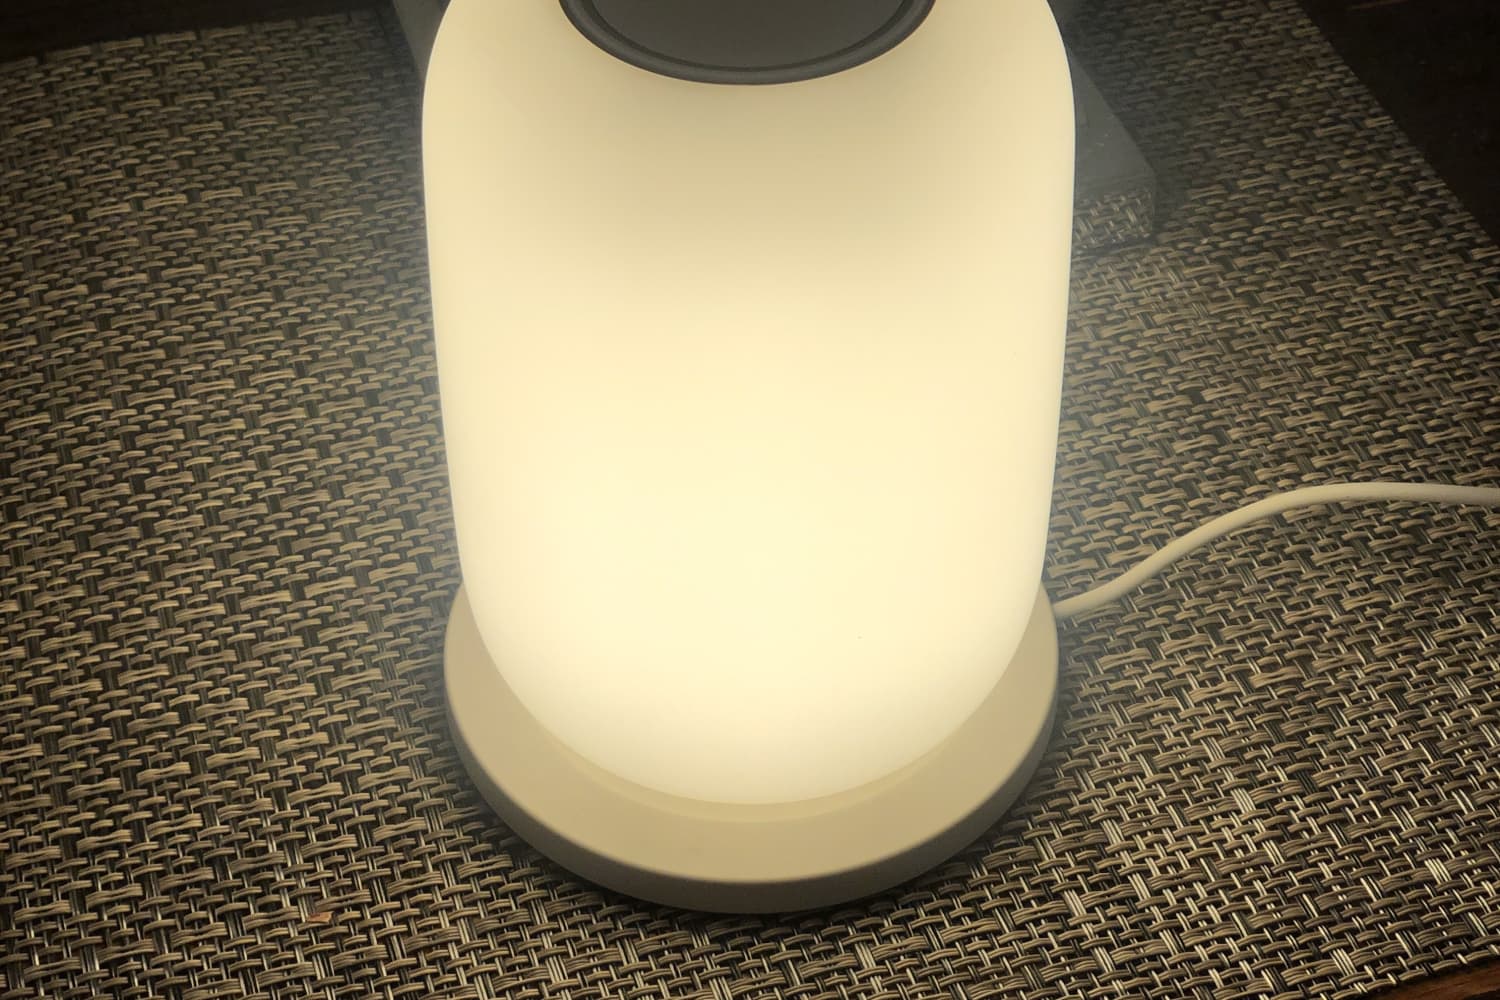 Interconnect vandtæt toilet Casper Glow Light Review | Apartment Therapy